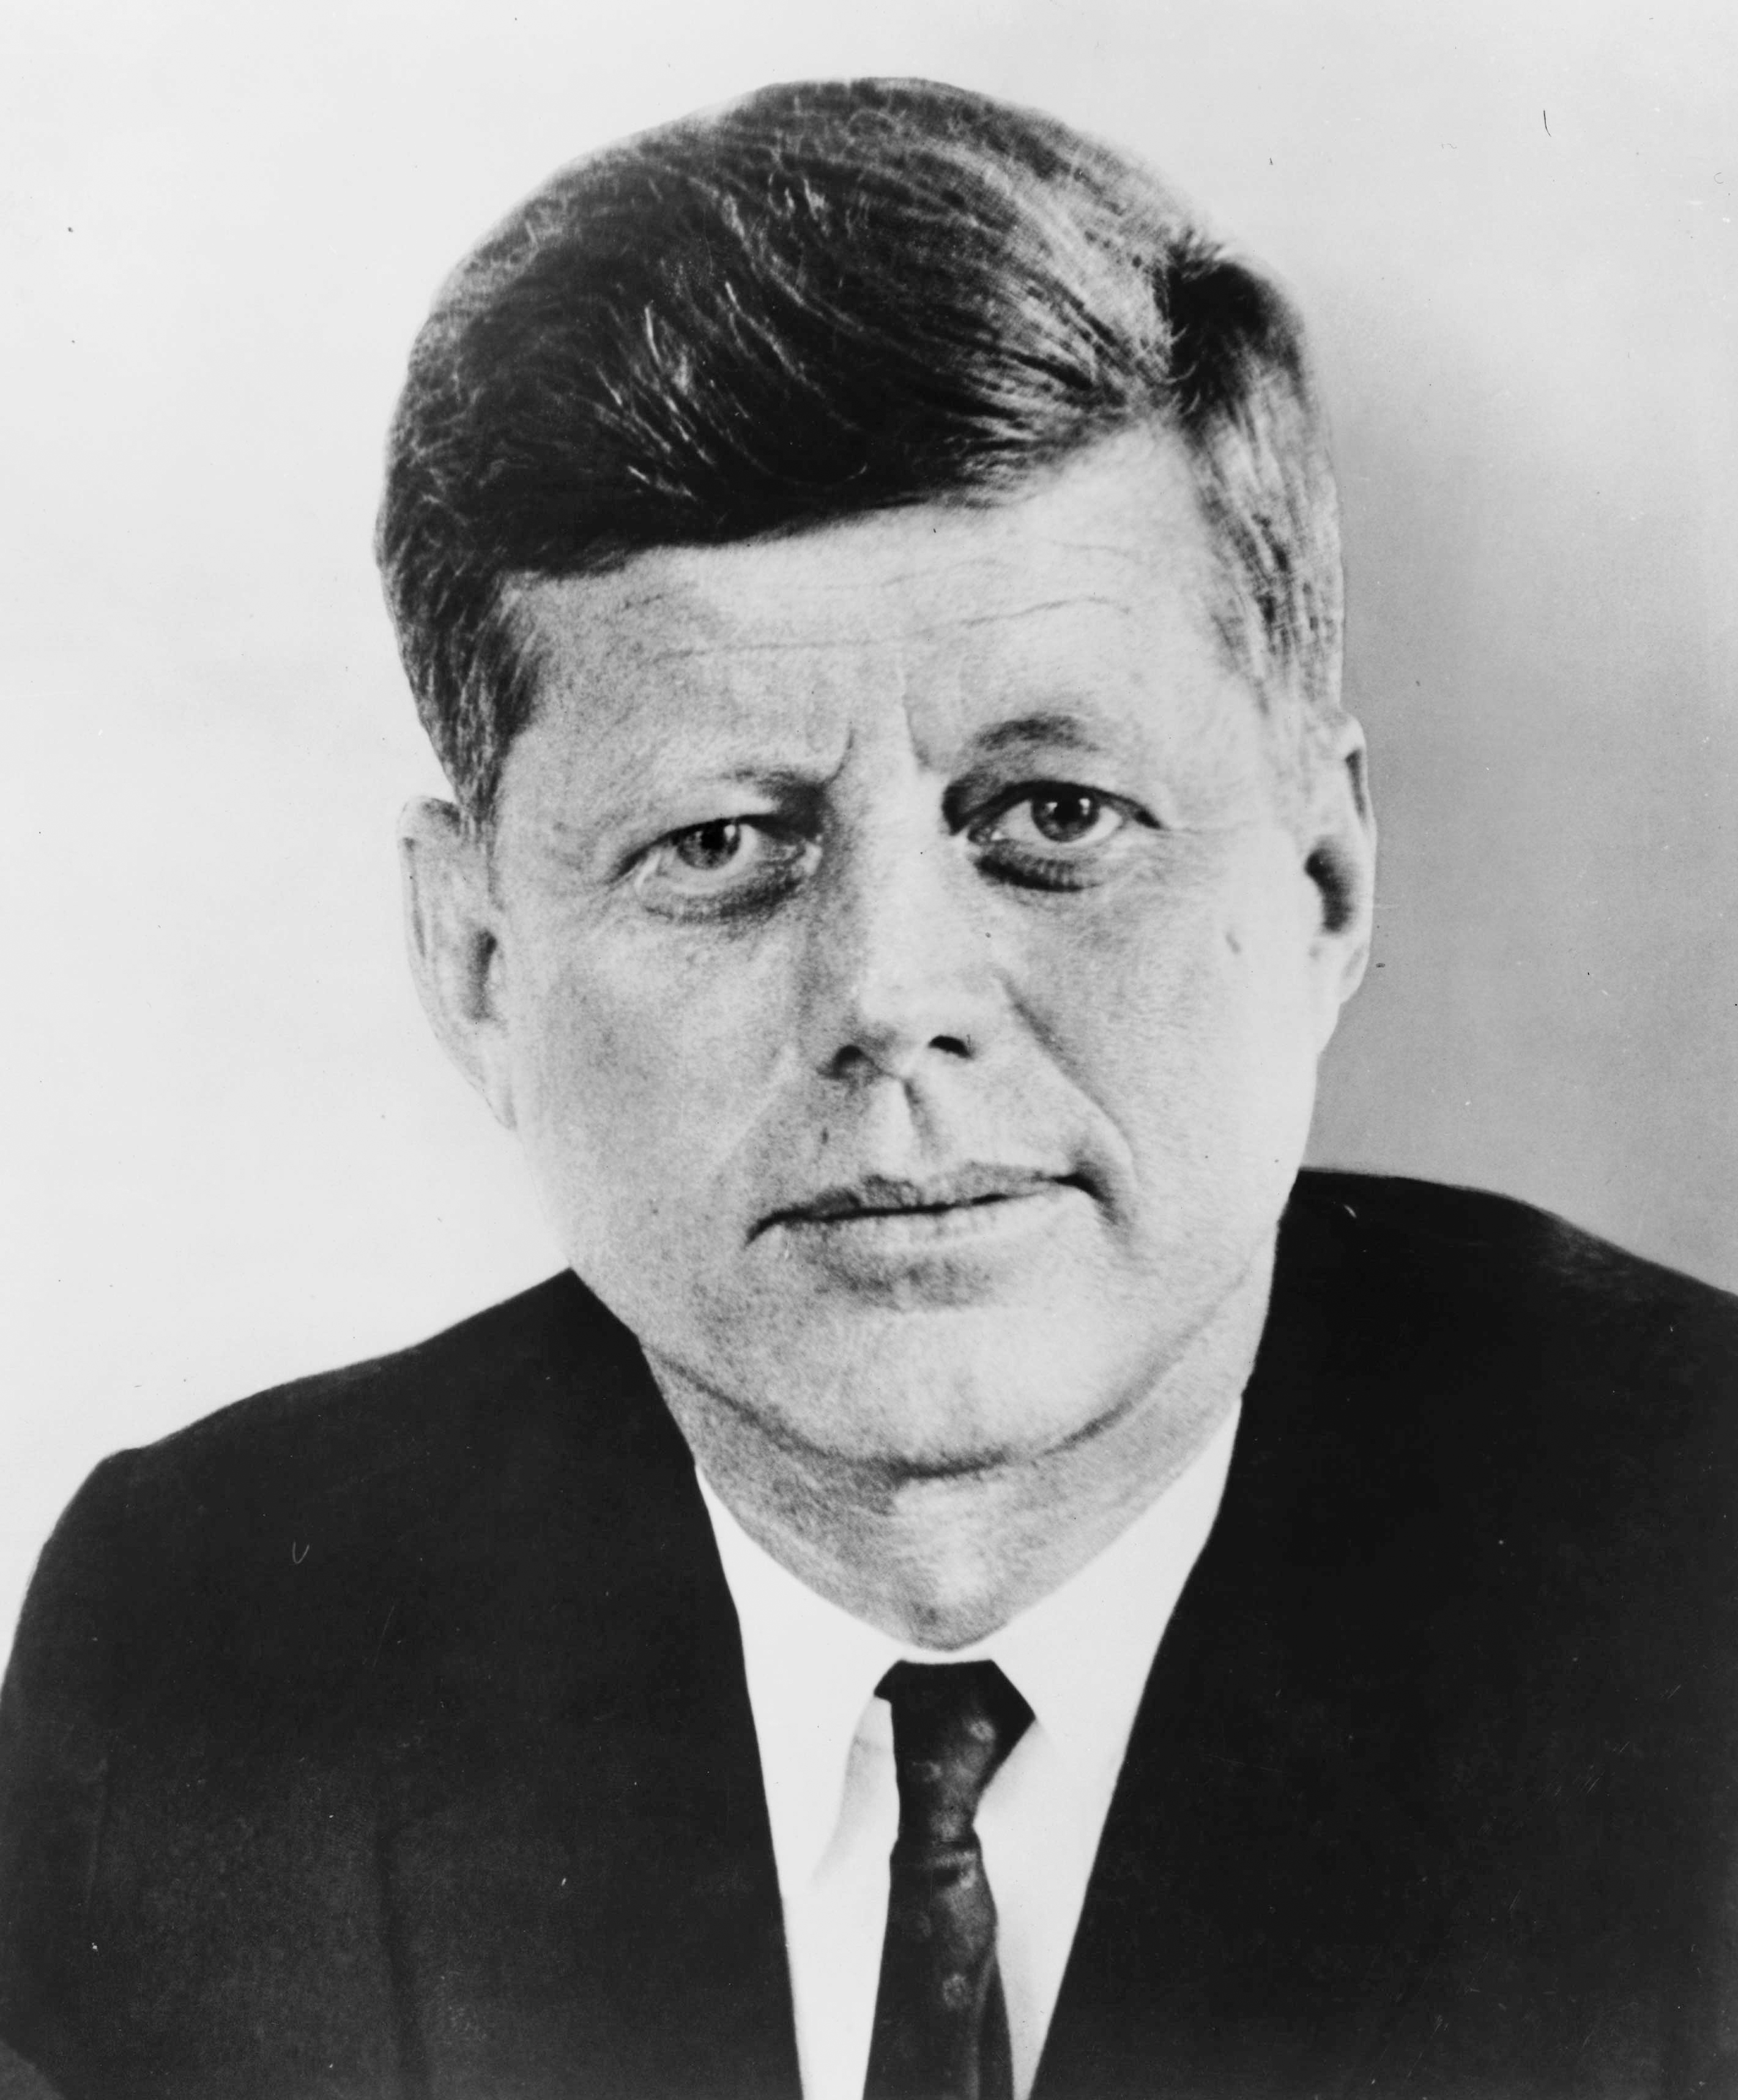 Description John F Kennedy.jpg